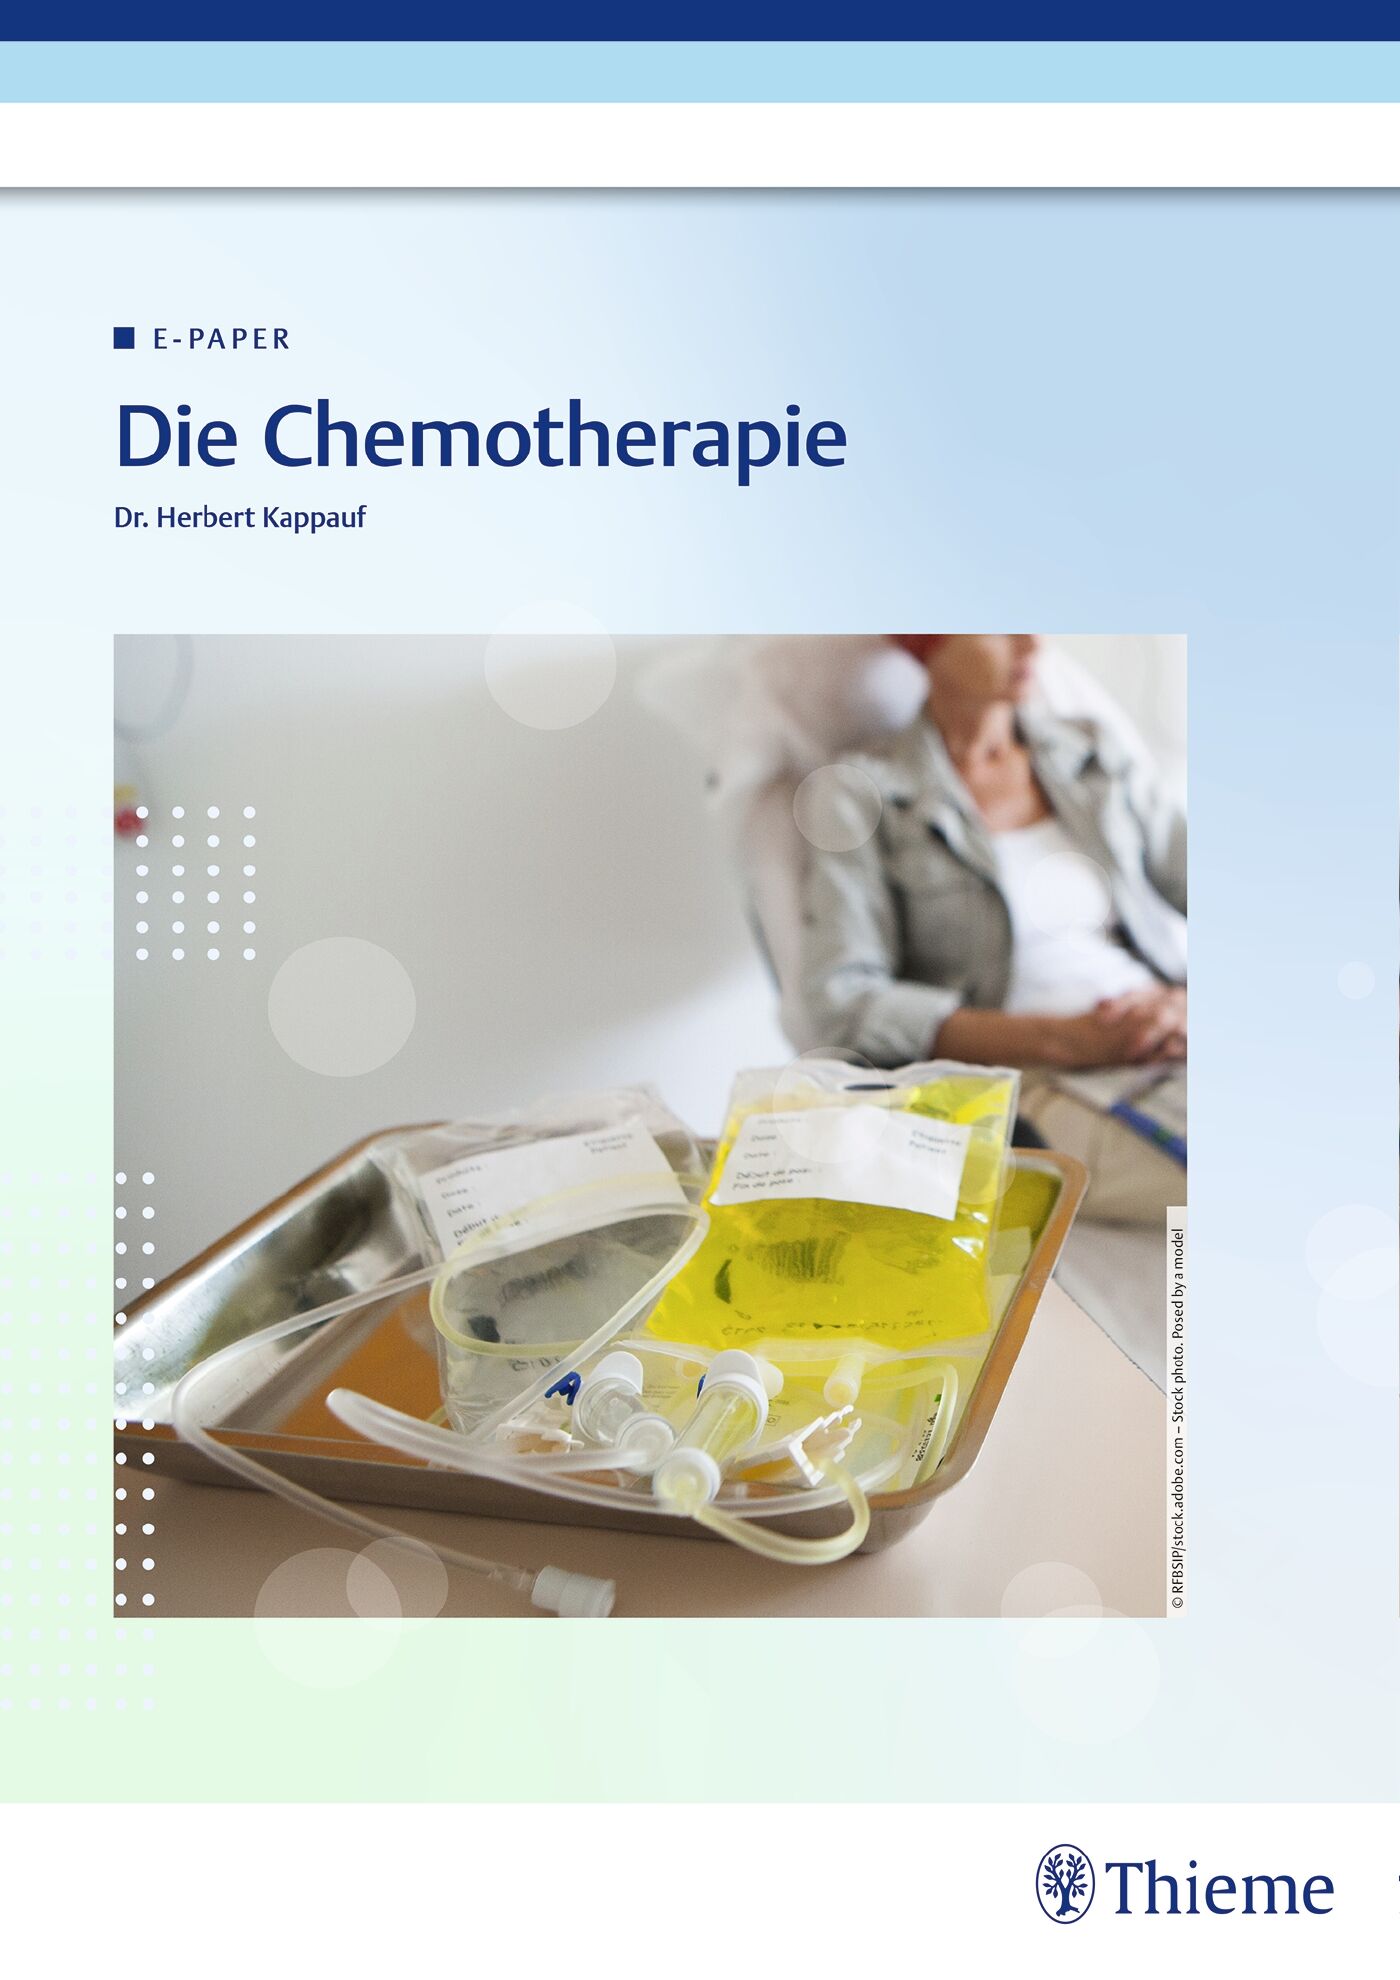 Die Chemotherapie, 9783432115788